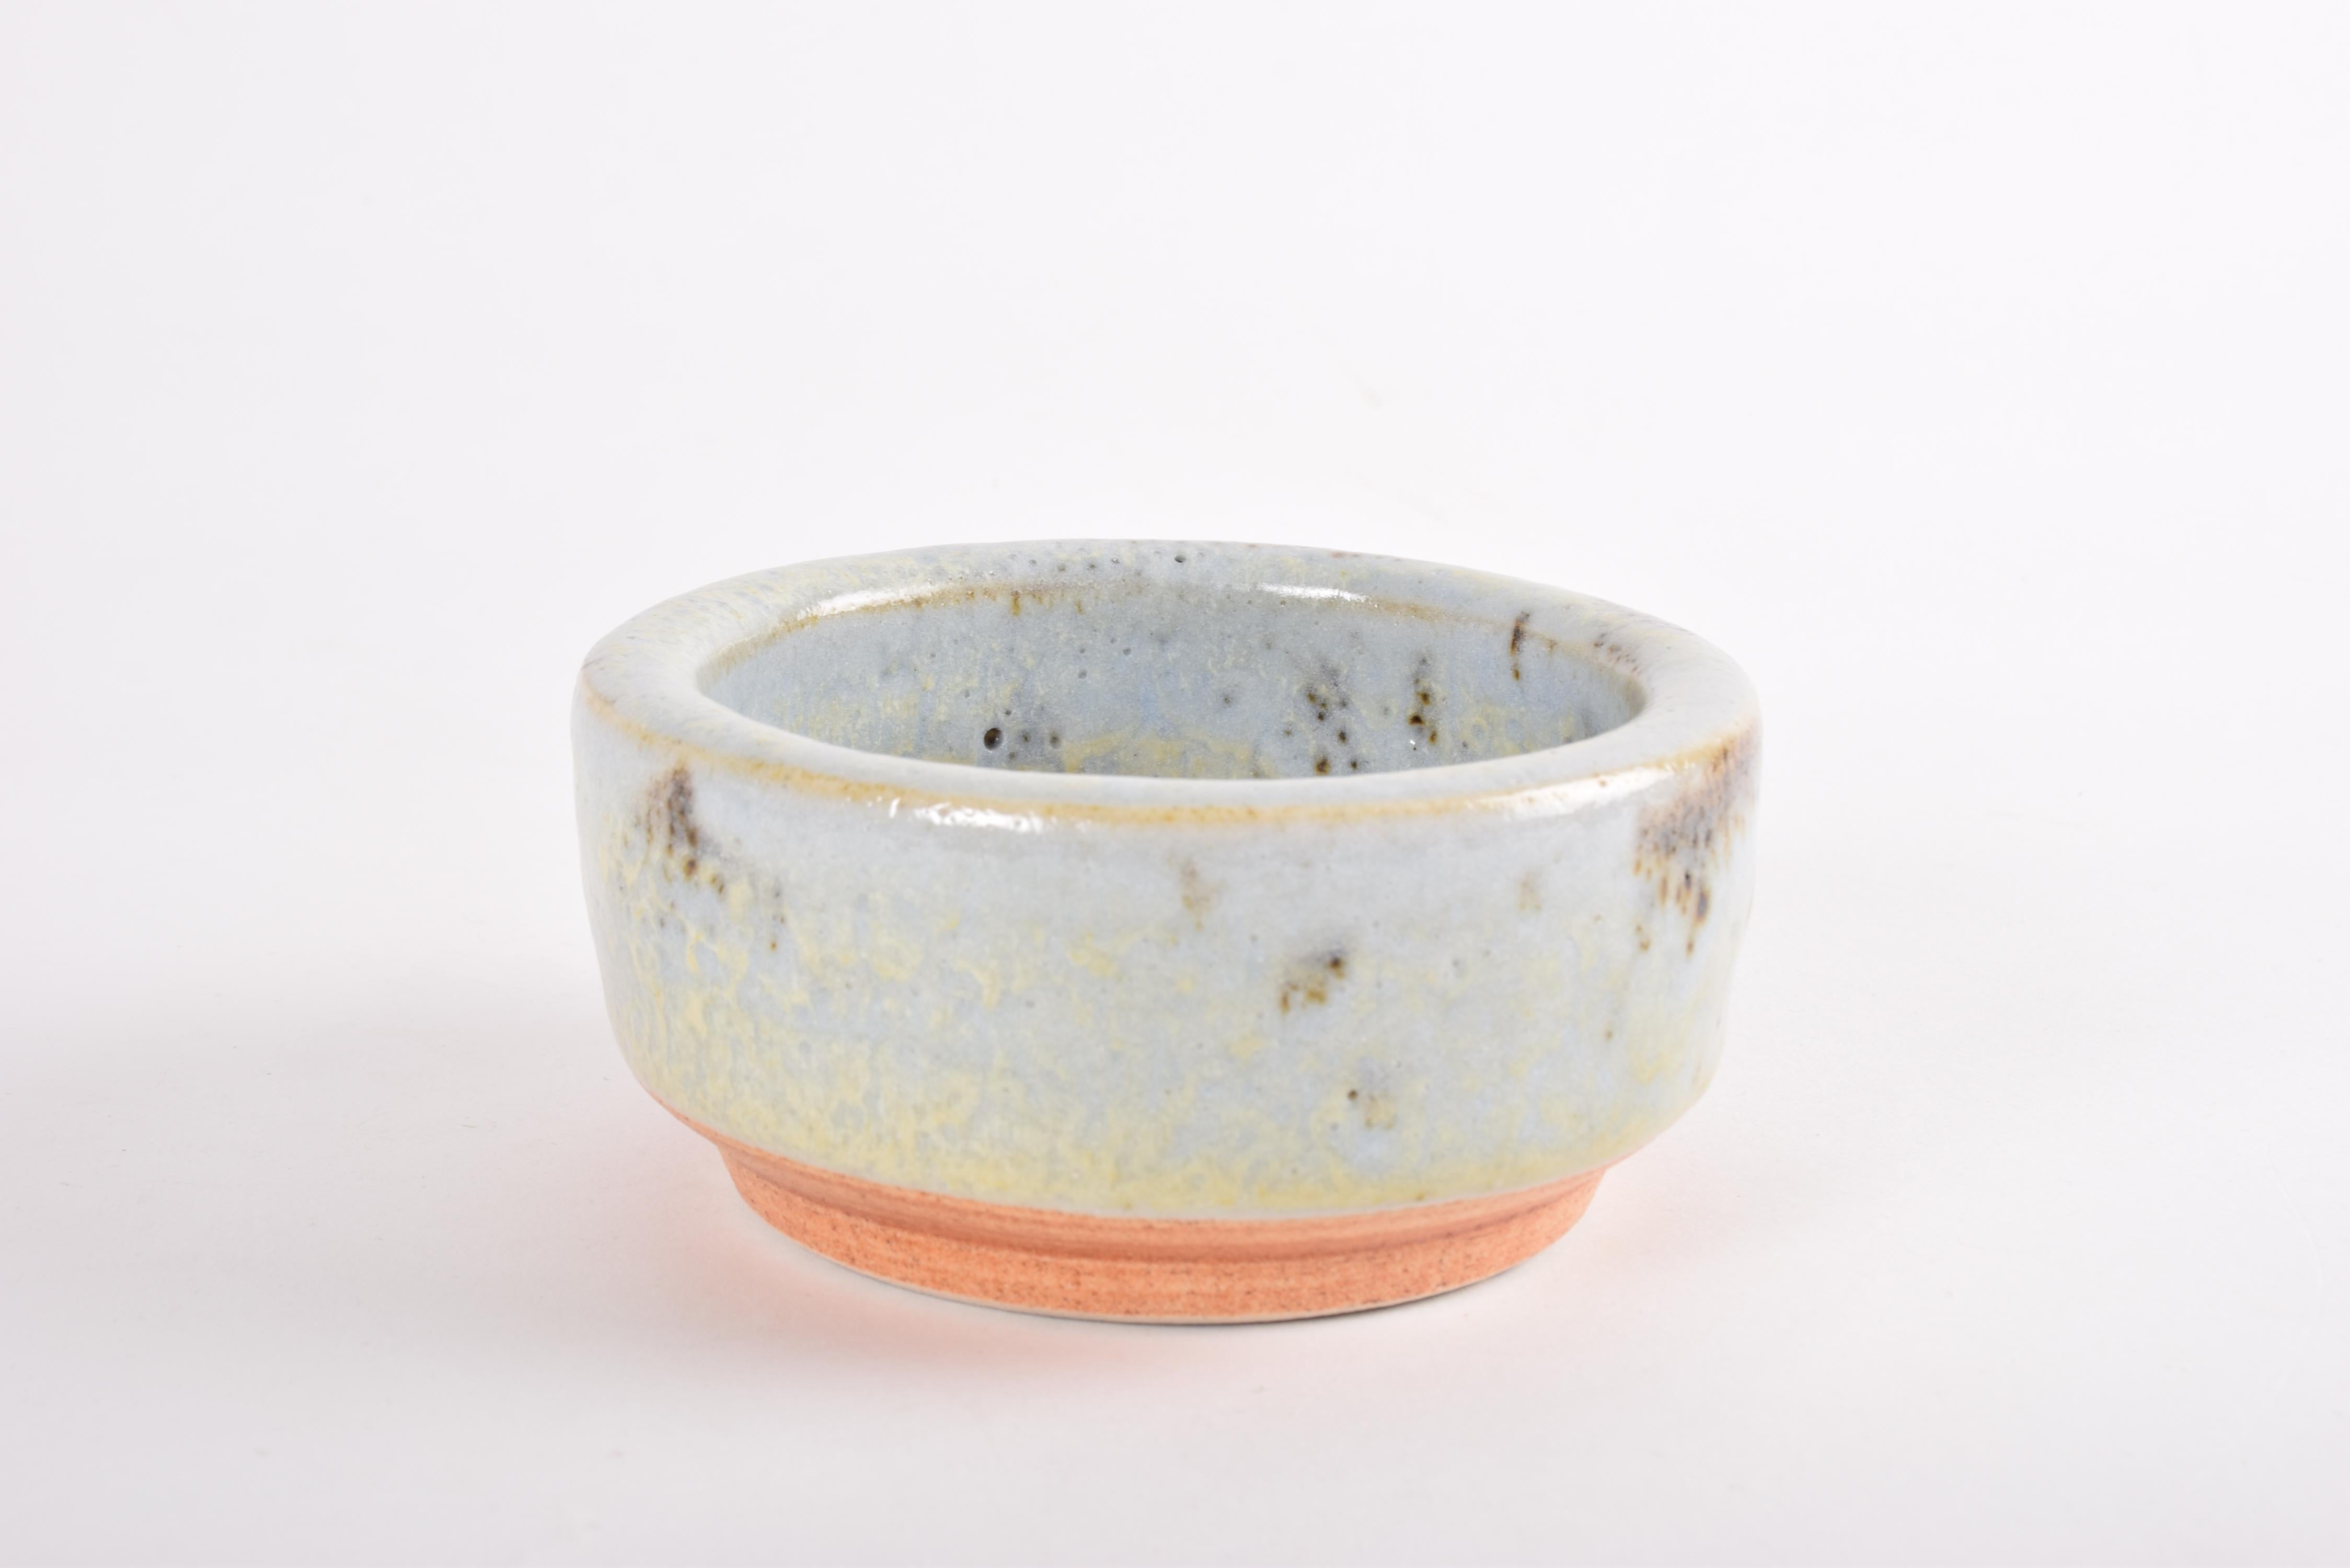 20th Century Jørgen Mogensen Own Studio Bowl with Speckled Glaze, Danish Modern Ceramic 1960s For Sale